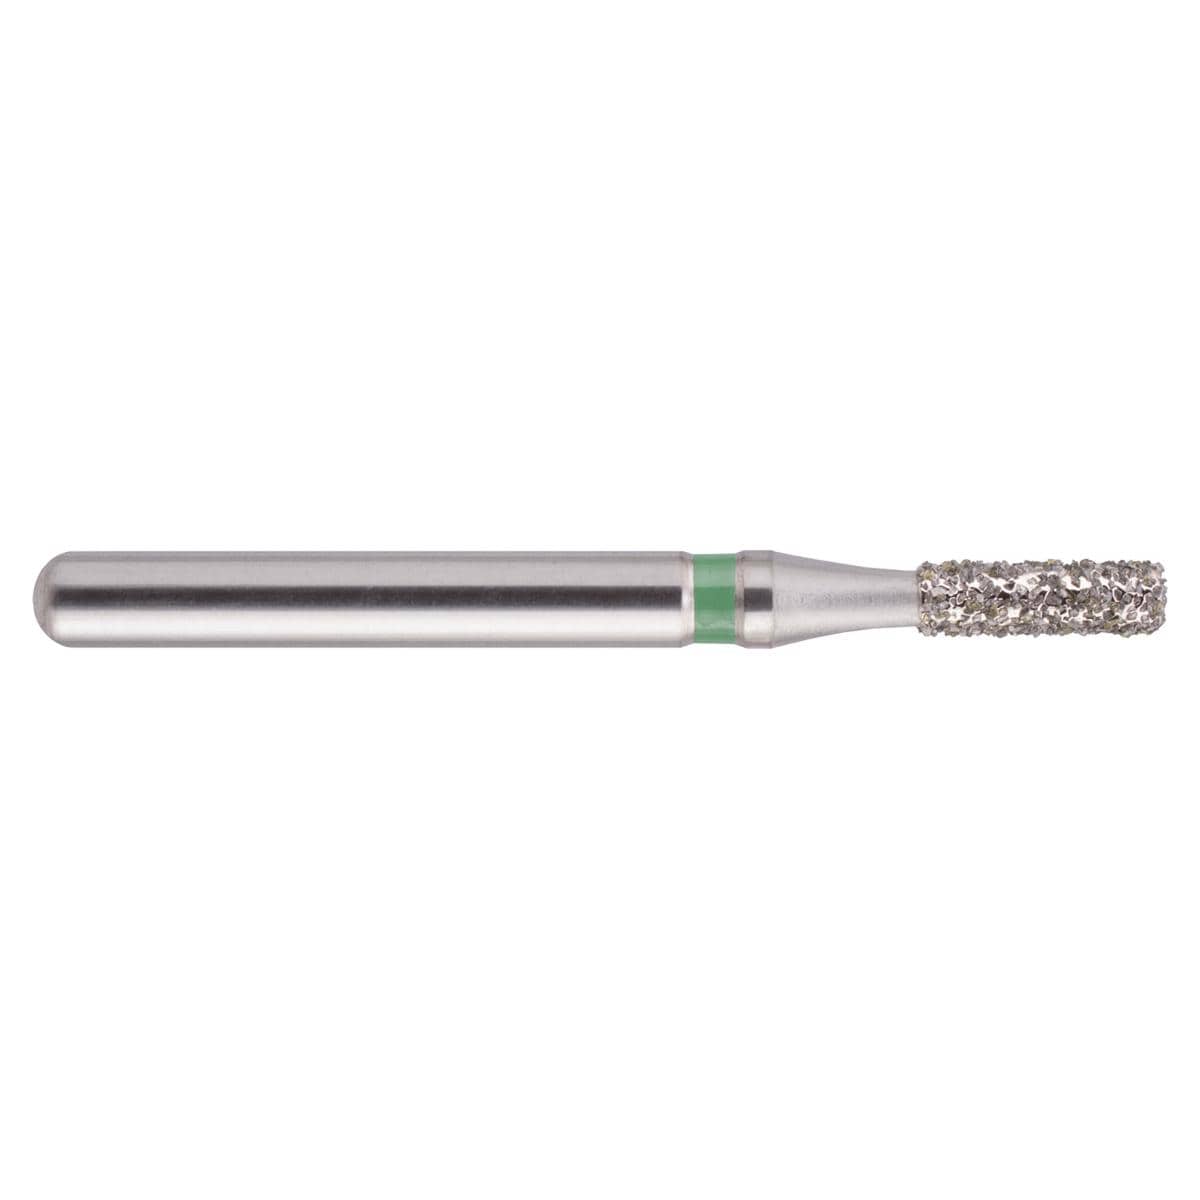 NeoDiamond FG, Form 109, Zylinder flach - ISO 014, grob (grün), Packung 10 Stück